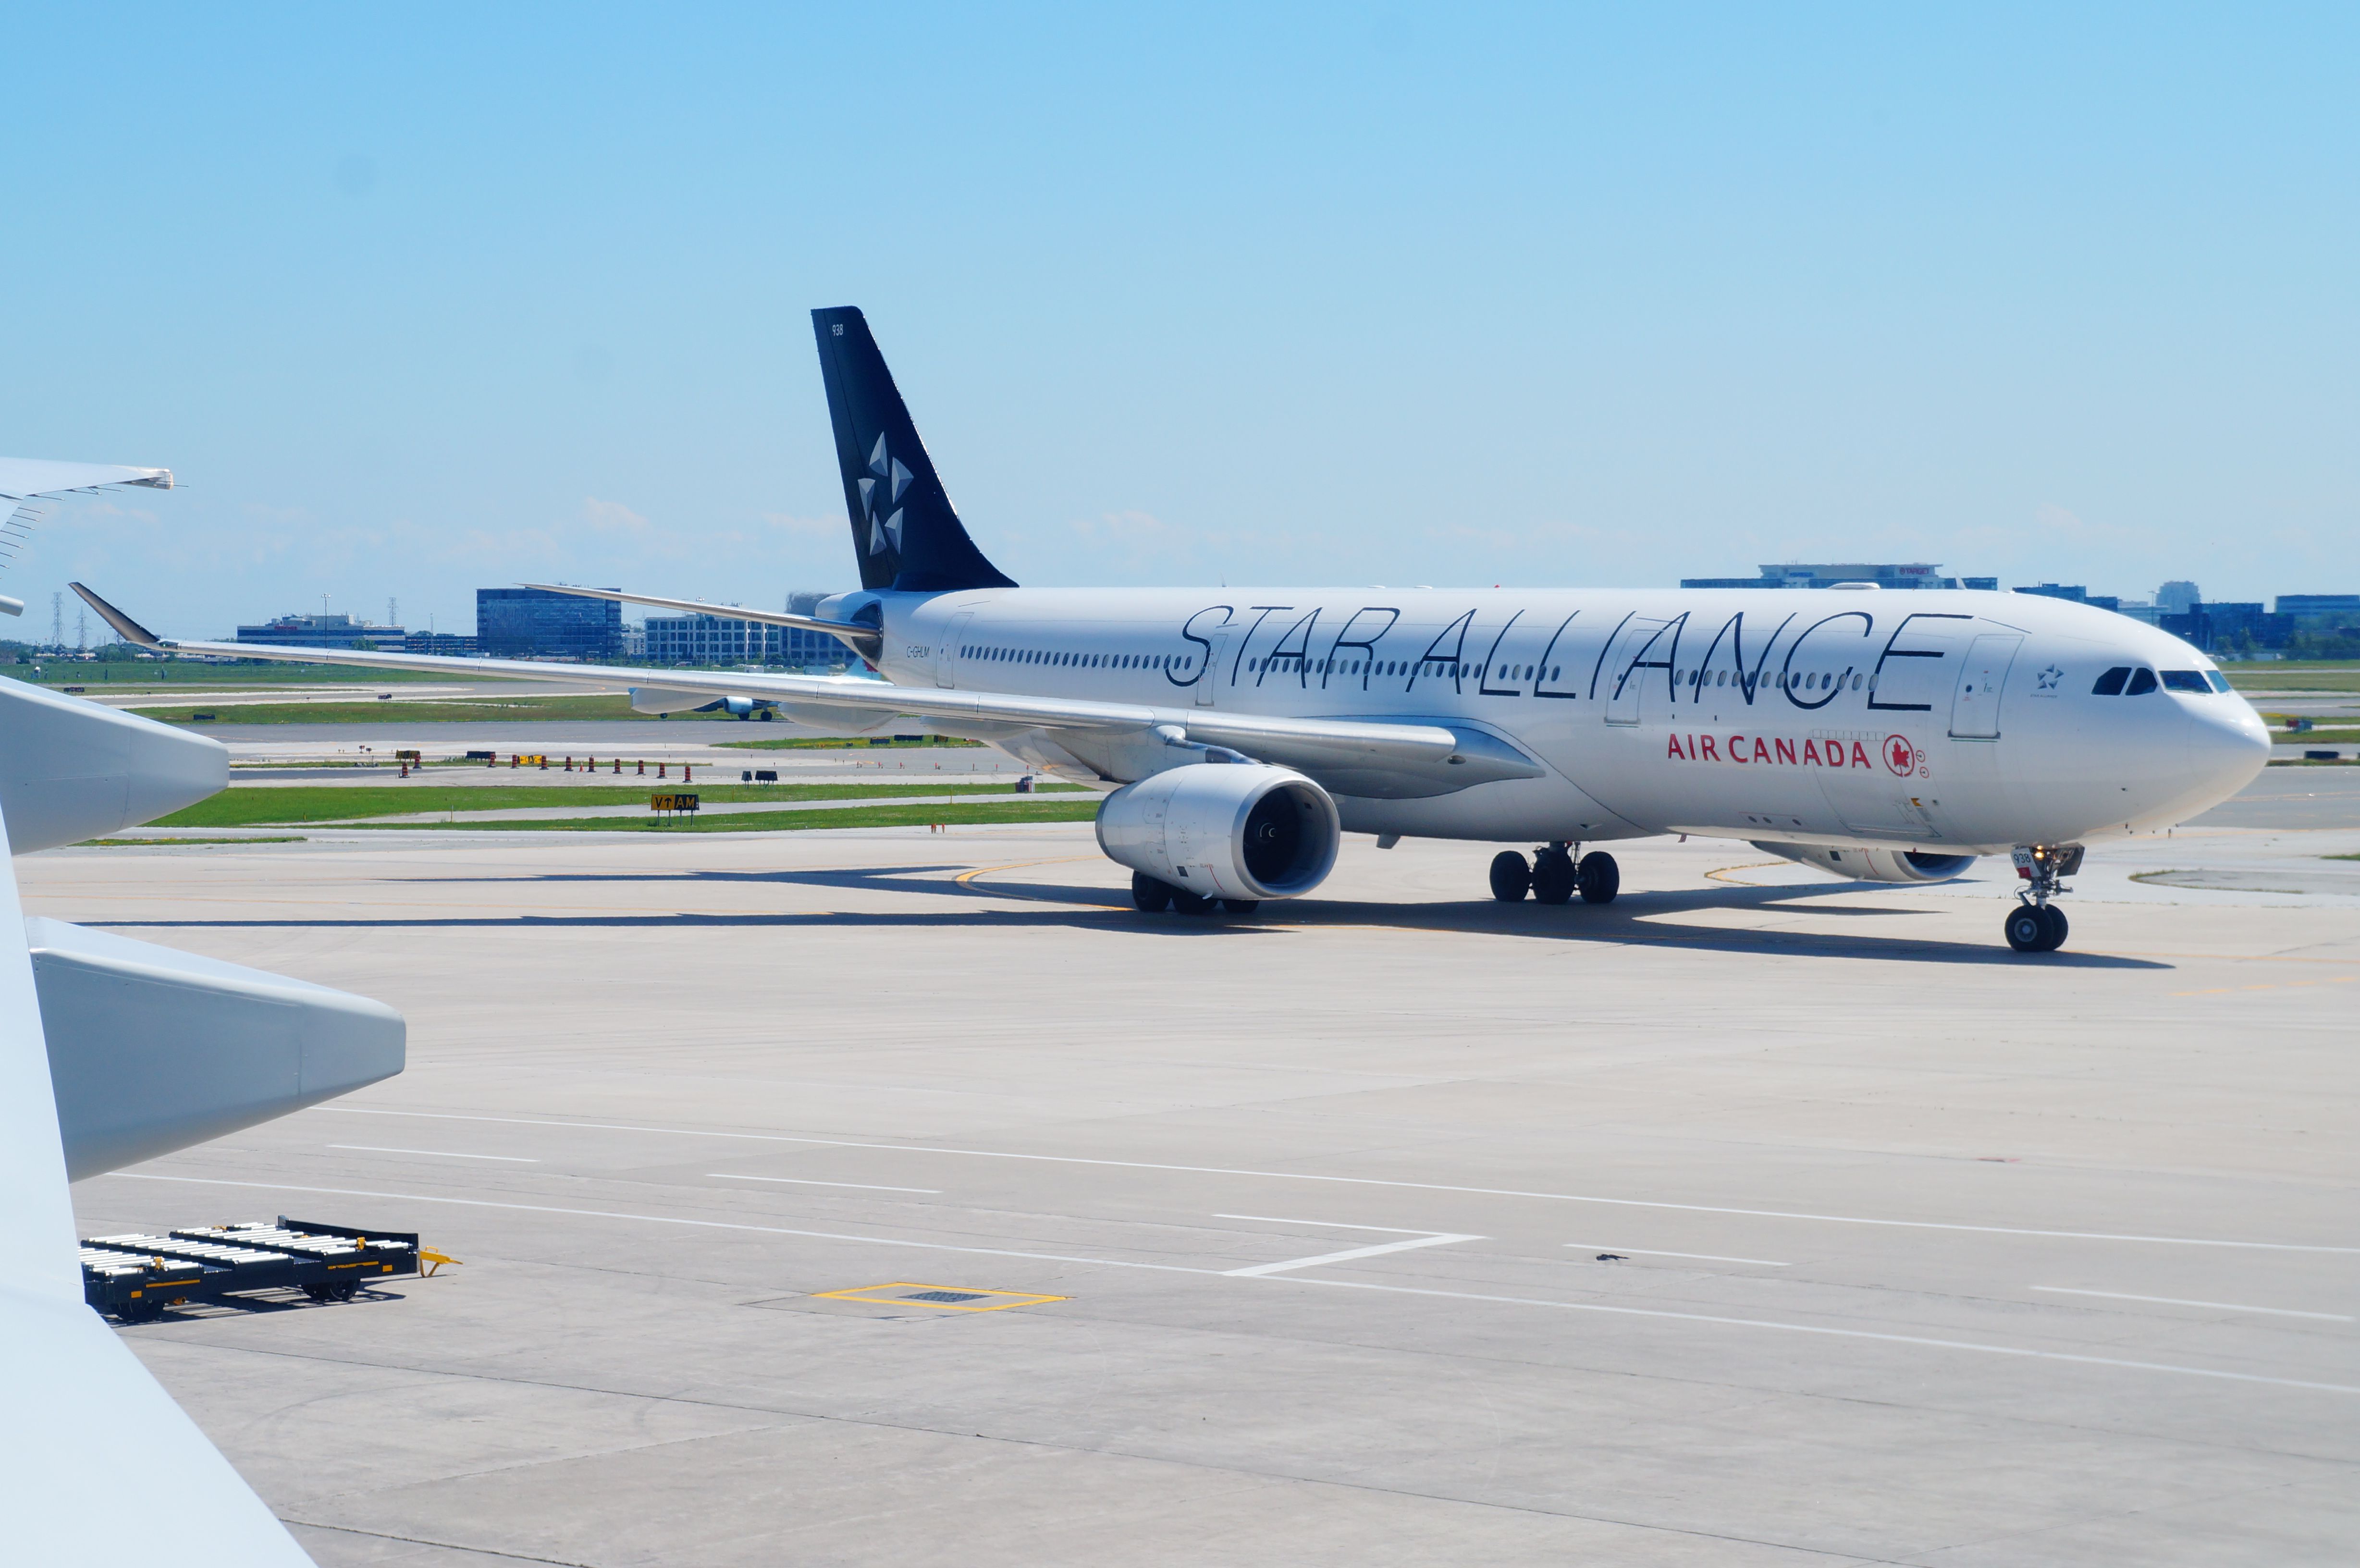 Air Canada A330-200 in Star Alliance livery